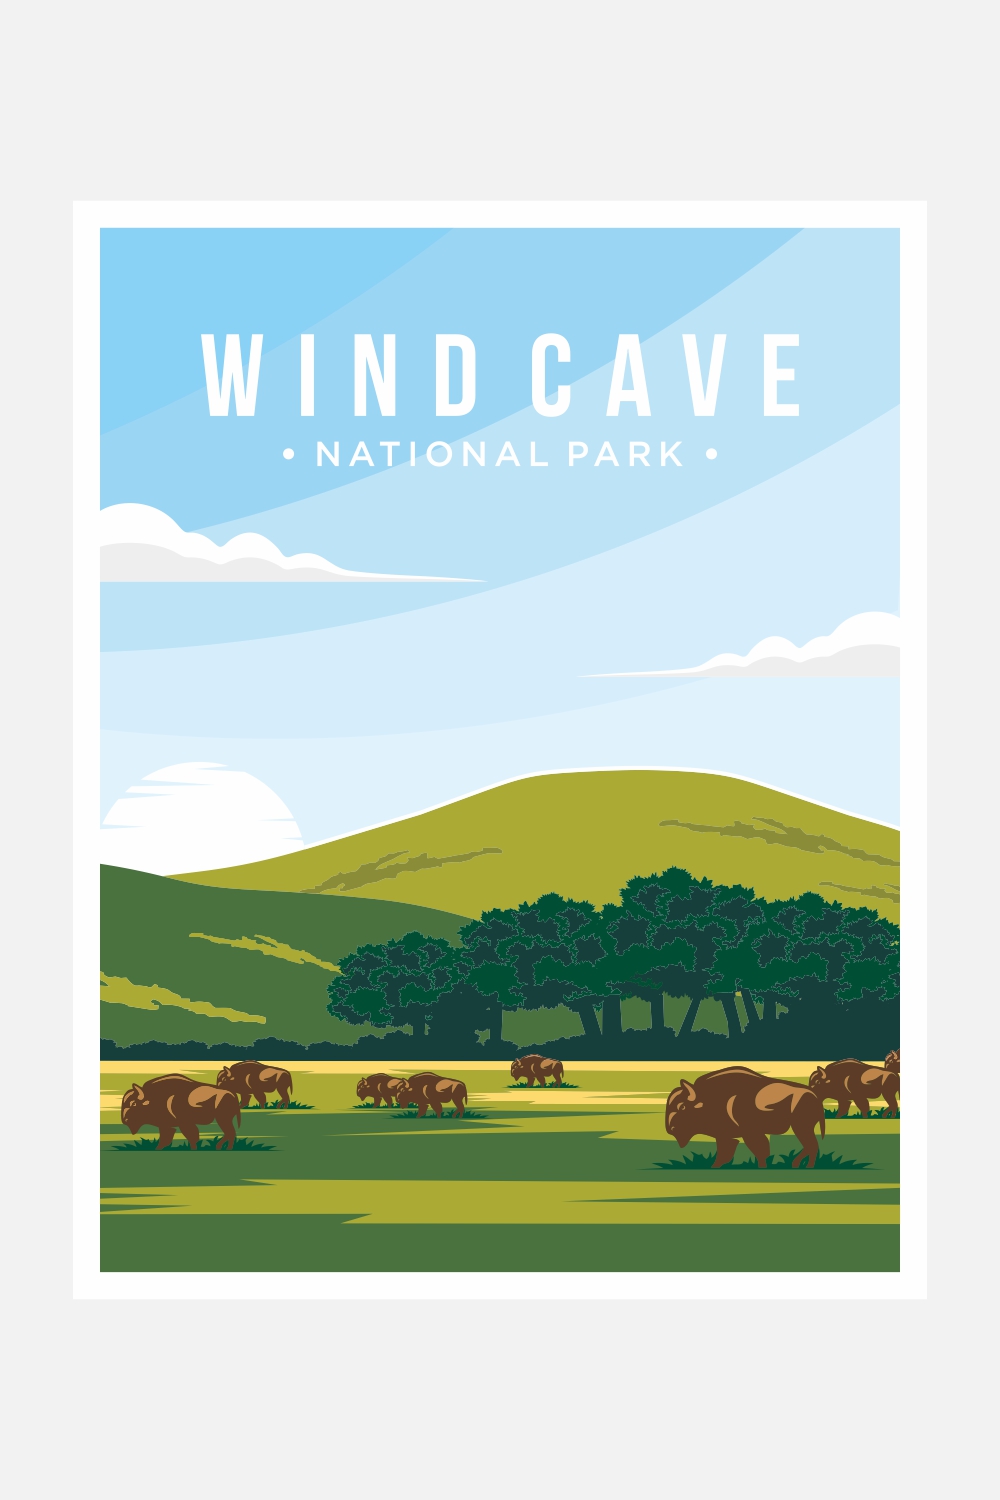 Wind Cave National Park poster vector illustration design – Only $8 pinterest preview image.